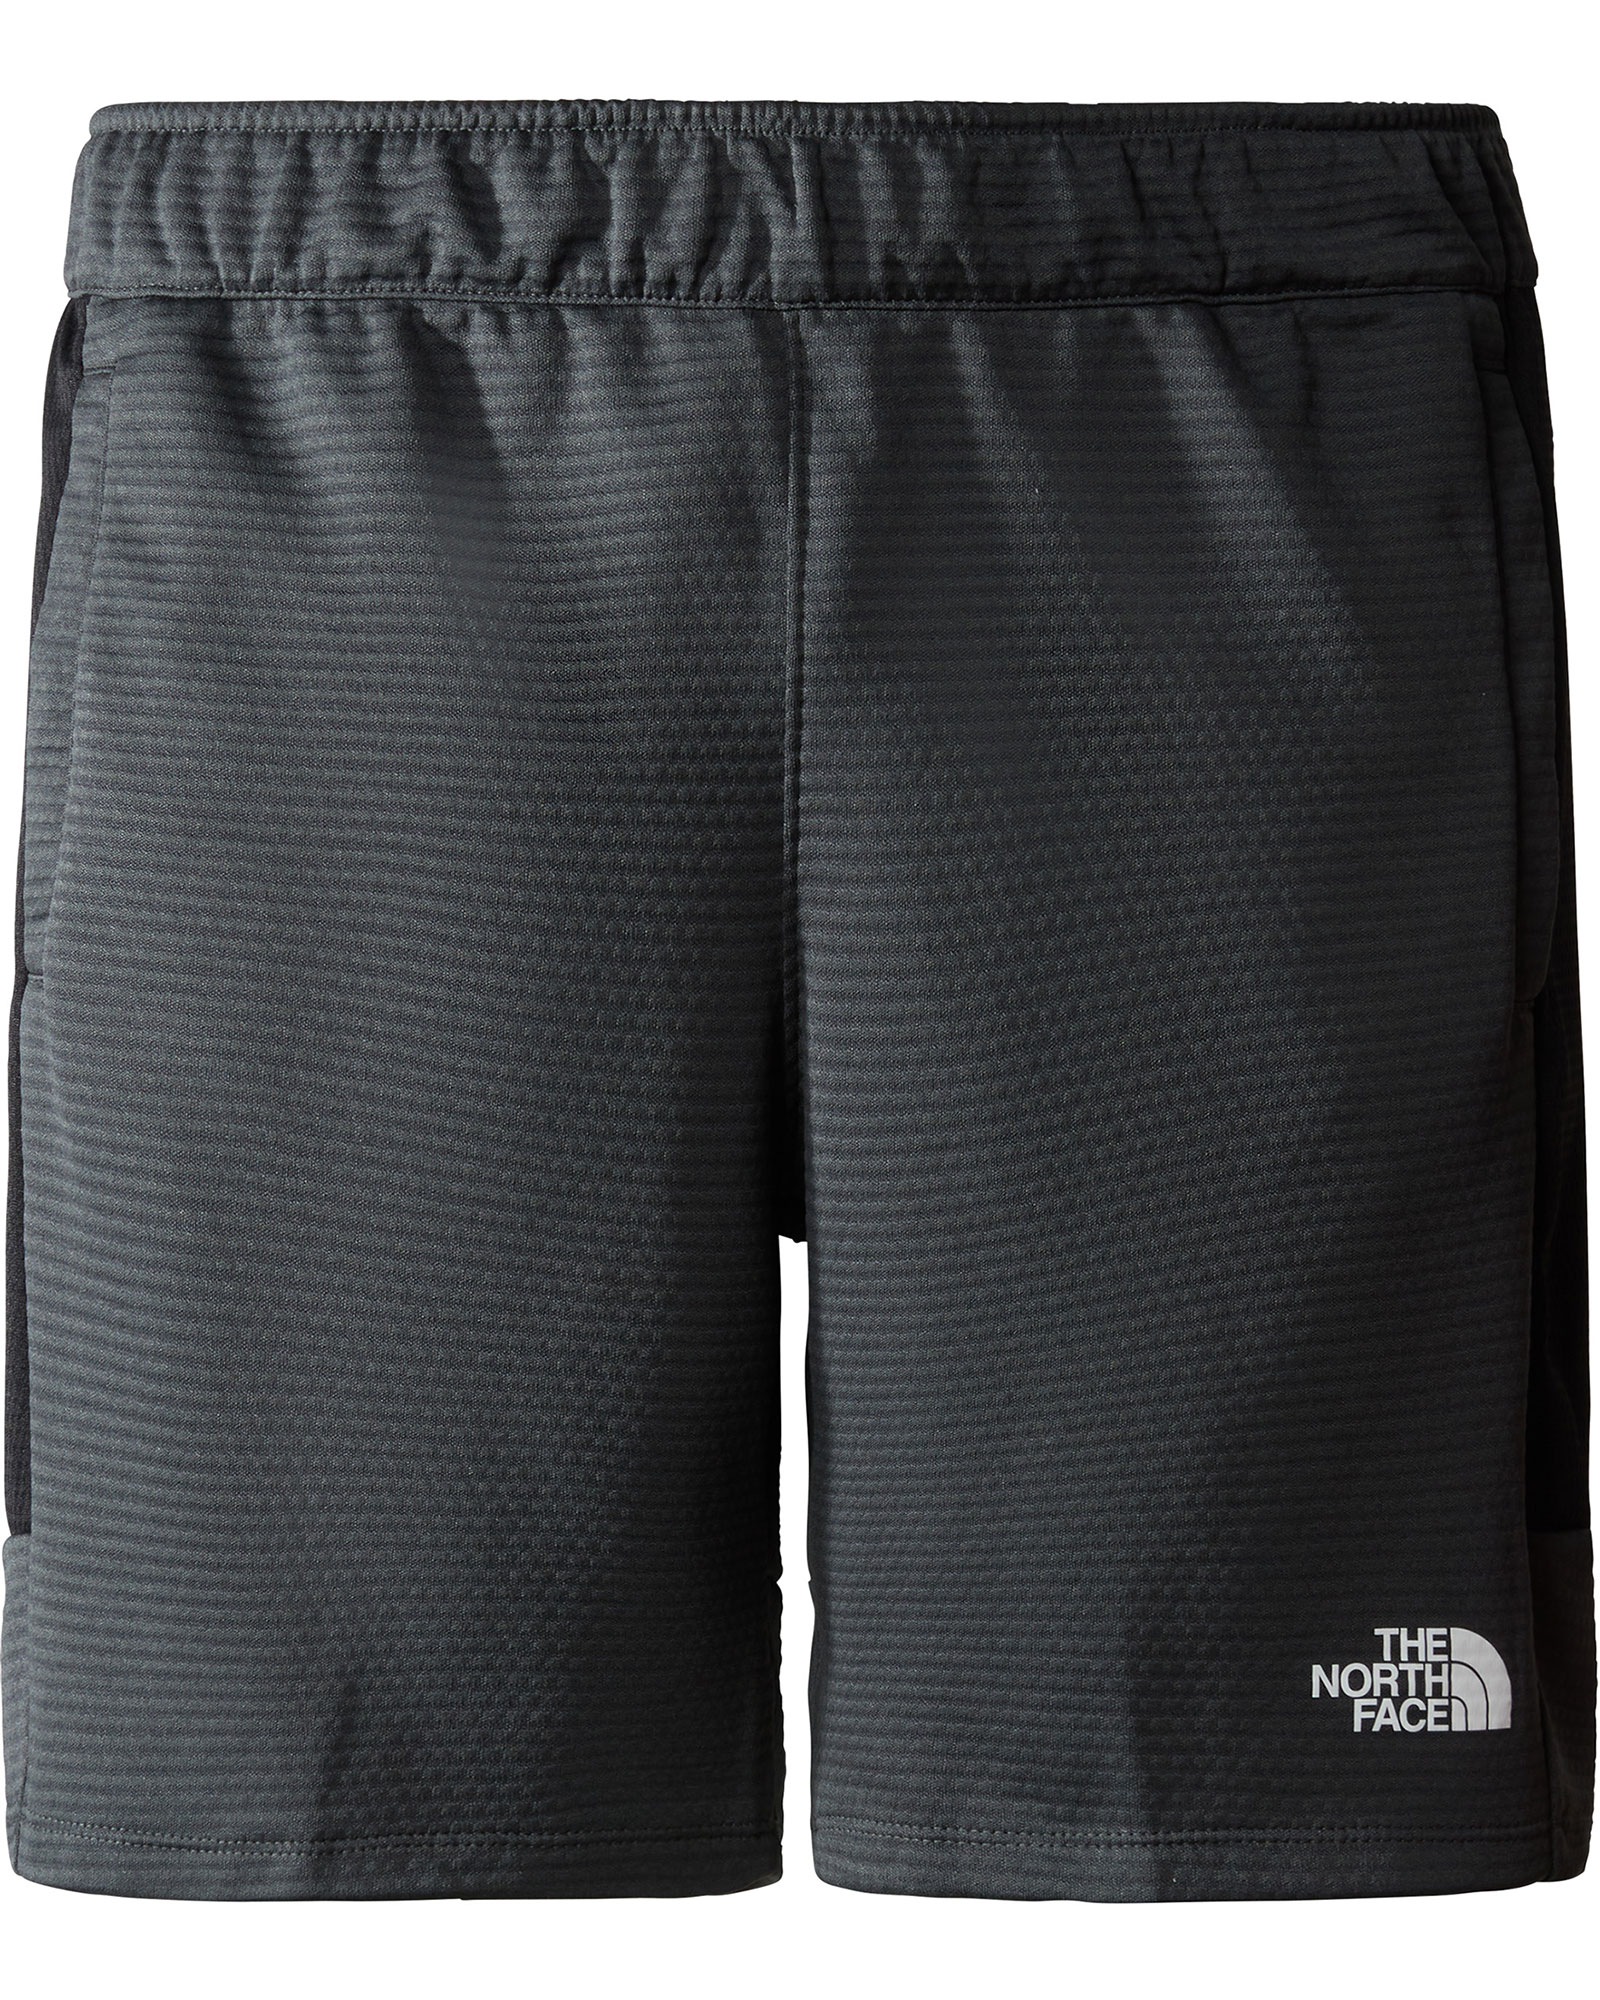 The North Face Men’s MA Fleece Shorts - Asphalt Grey-TNF Black S